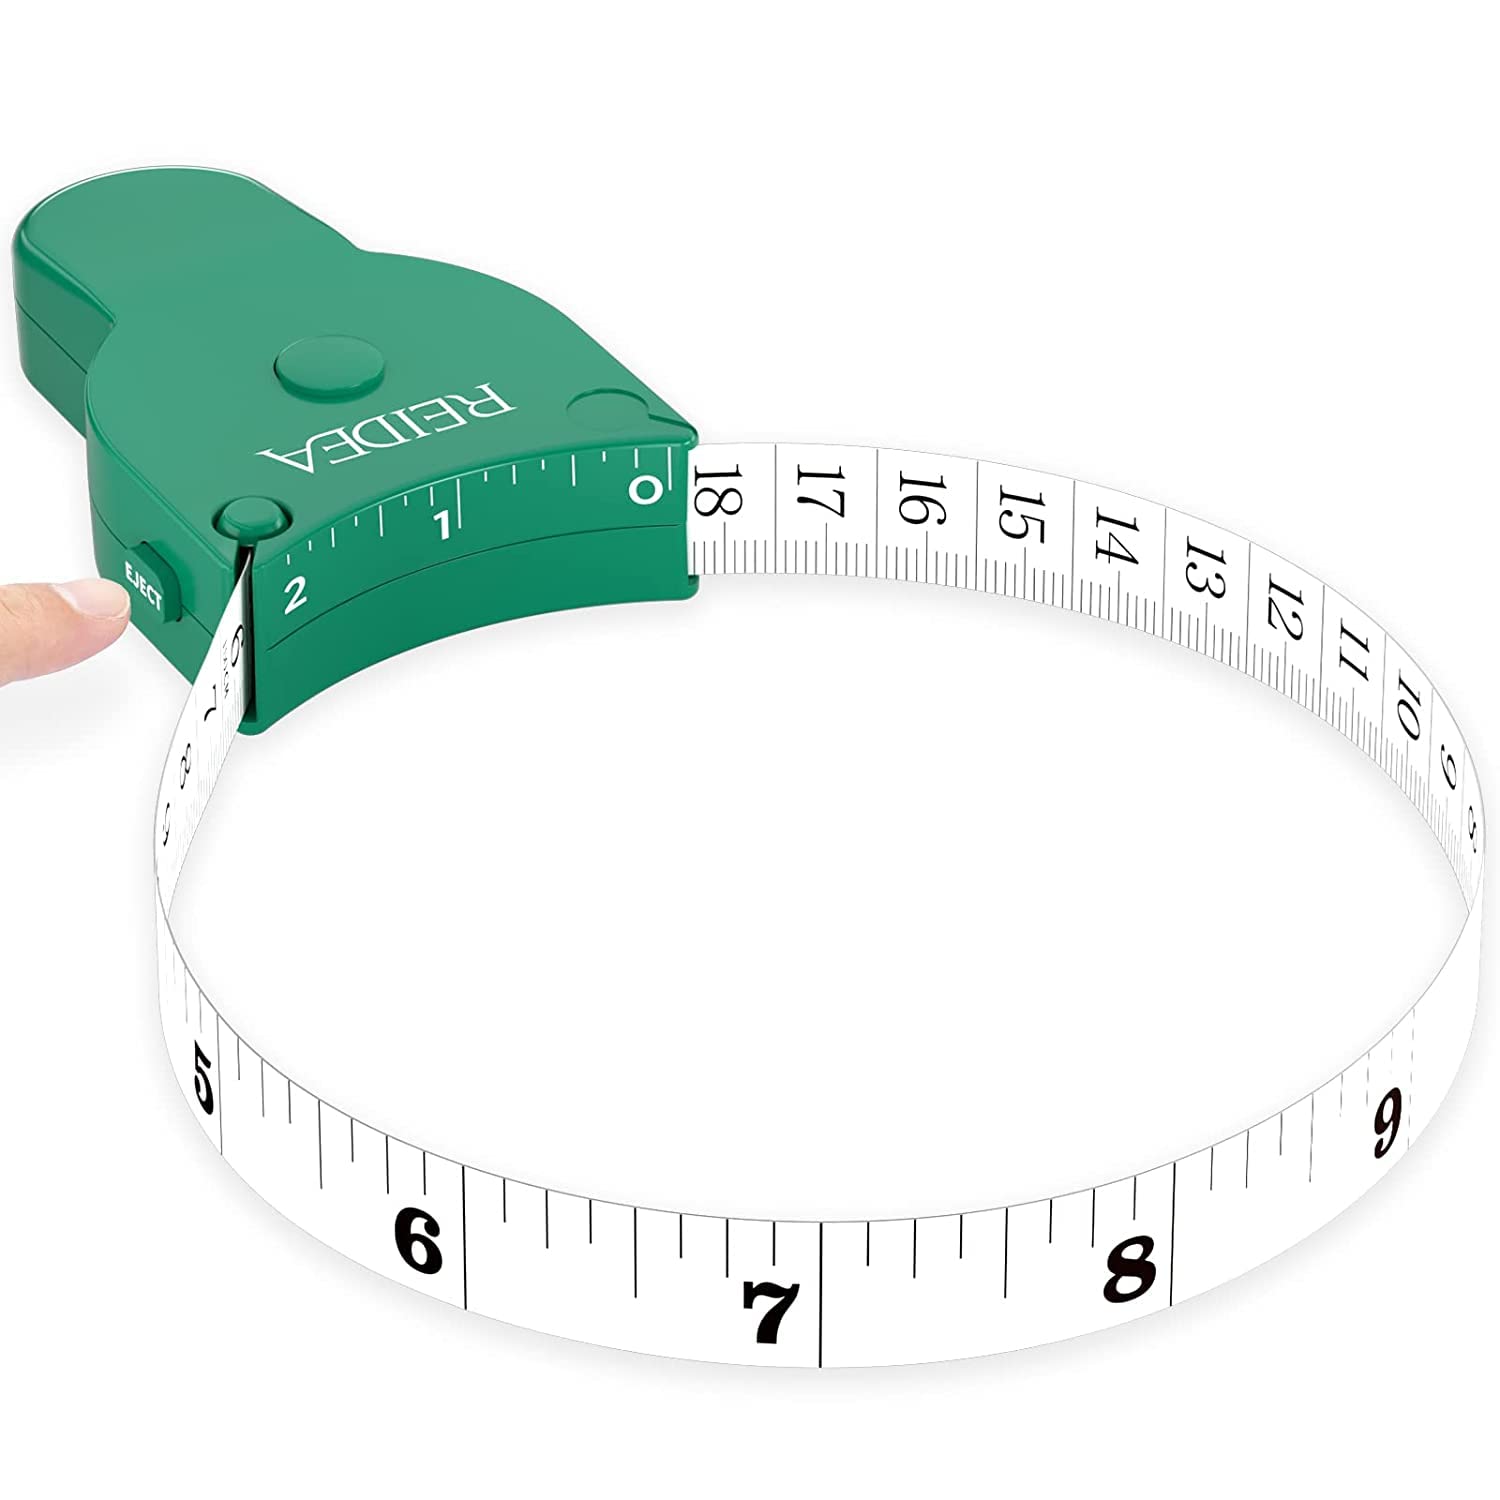 Body Measure Tape 60inch (150cm), Lock Pin and Push-Button Retract, Ergnomic and Portable Design, BLACK.